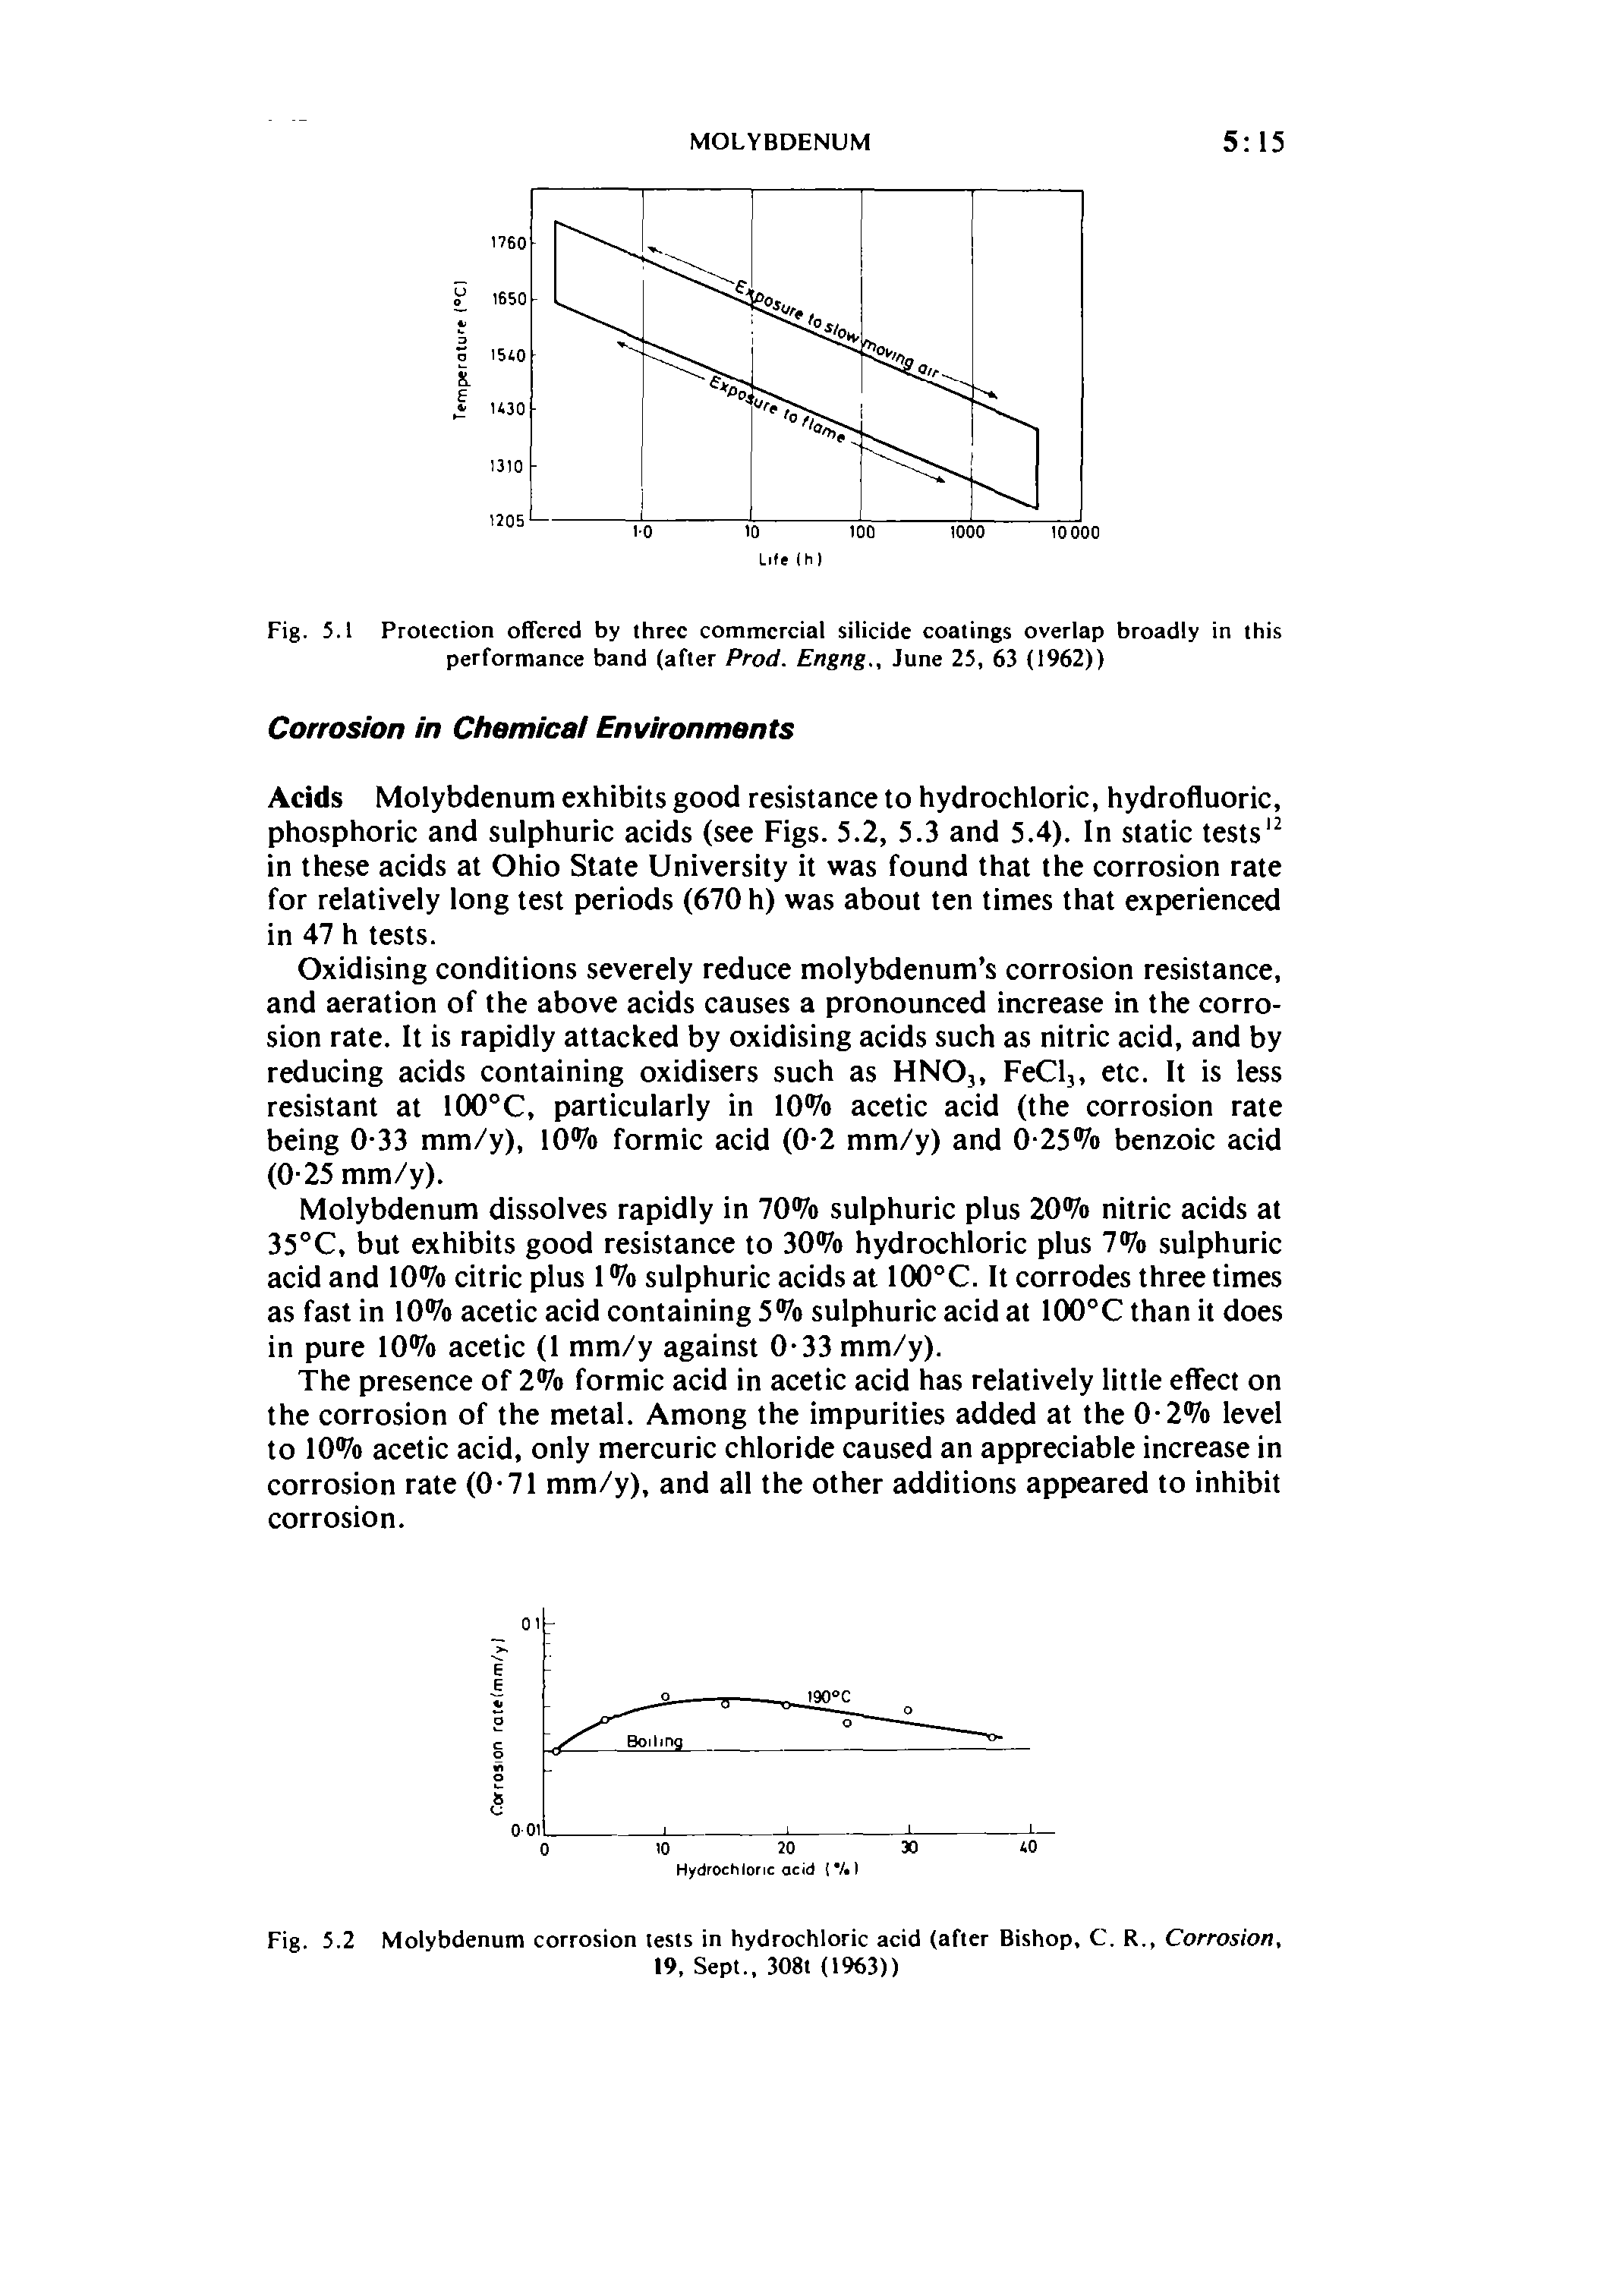 Fig. 5.2 Molybdenum corrosion tests in hydrochloric acid (after Bishop, C. R., Corrosion,...